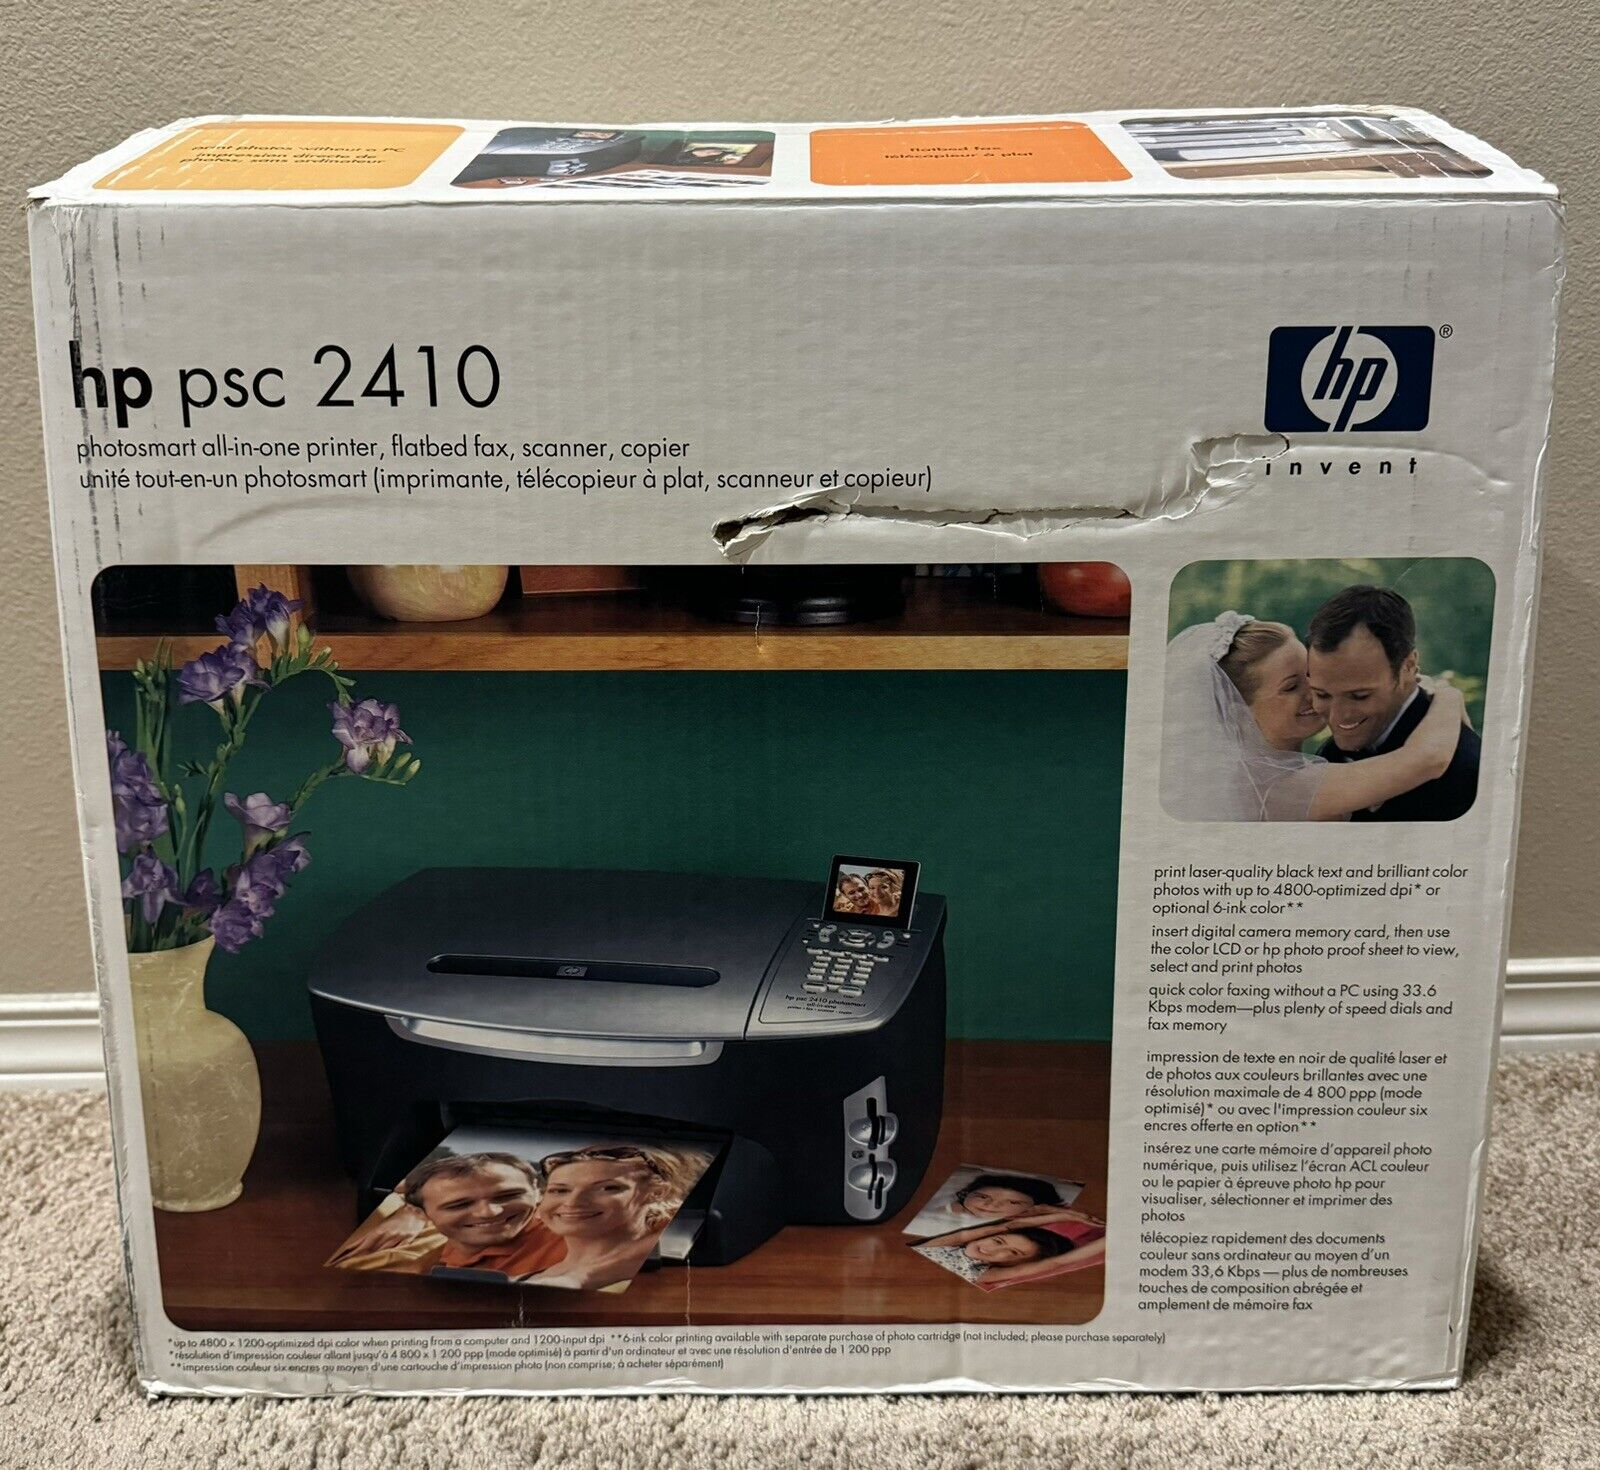 New HP PSC 2410 Photosmart All-In-One Printer Fax Scanner Copier Machine